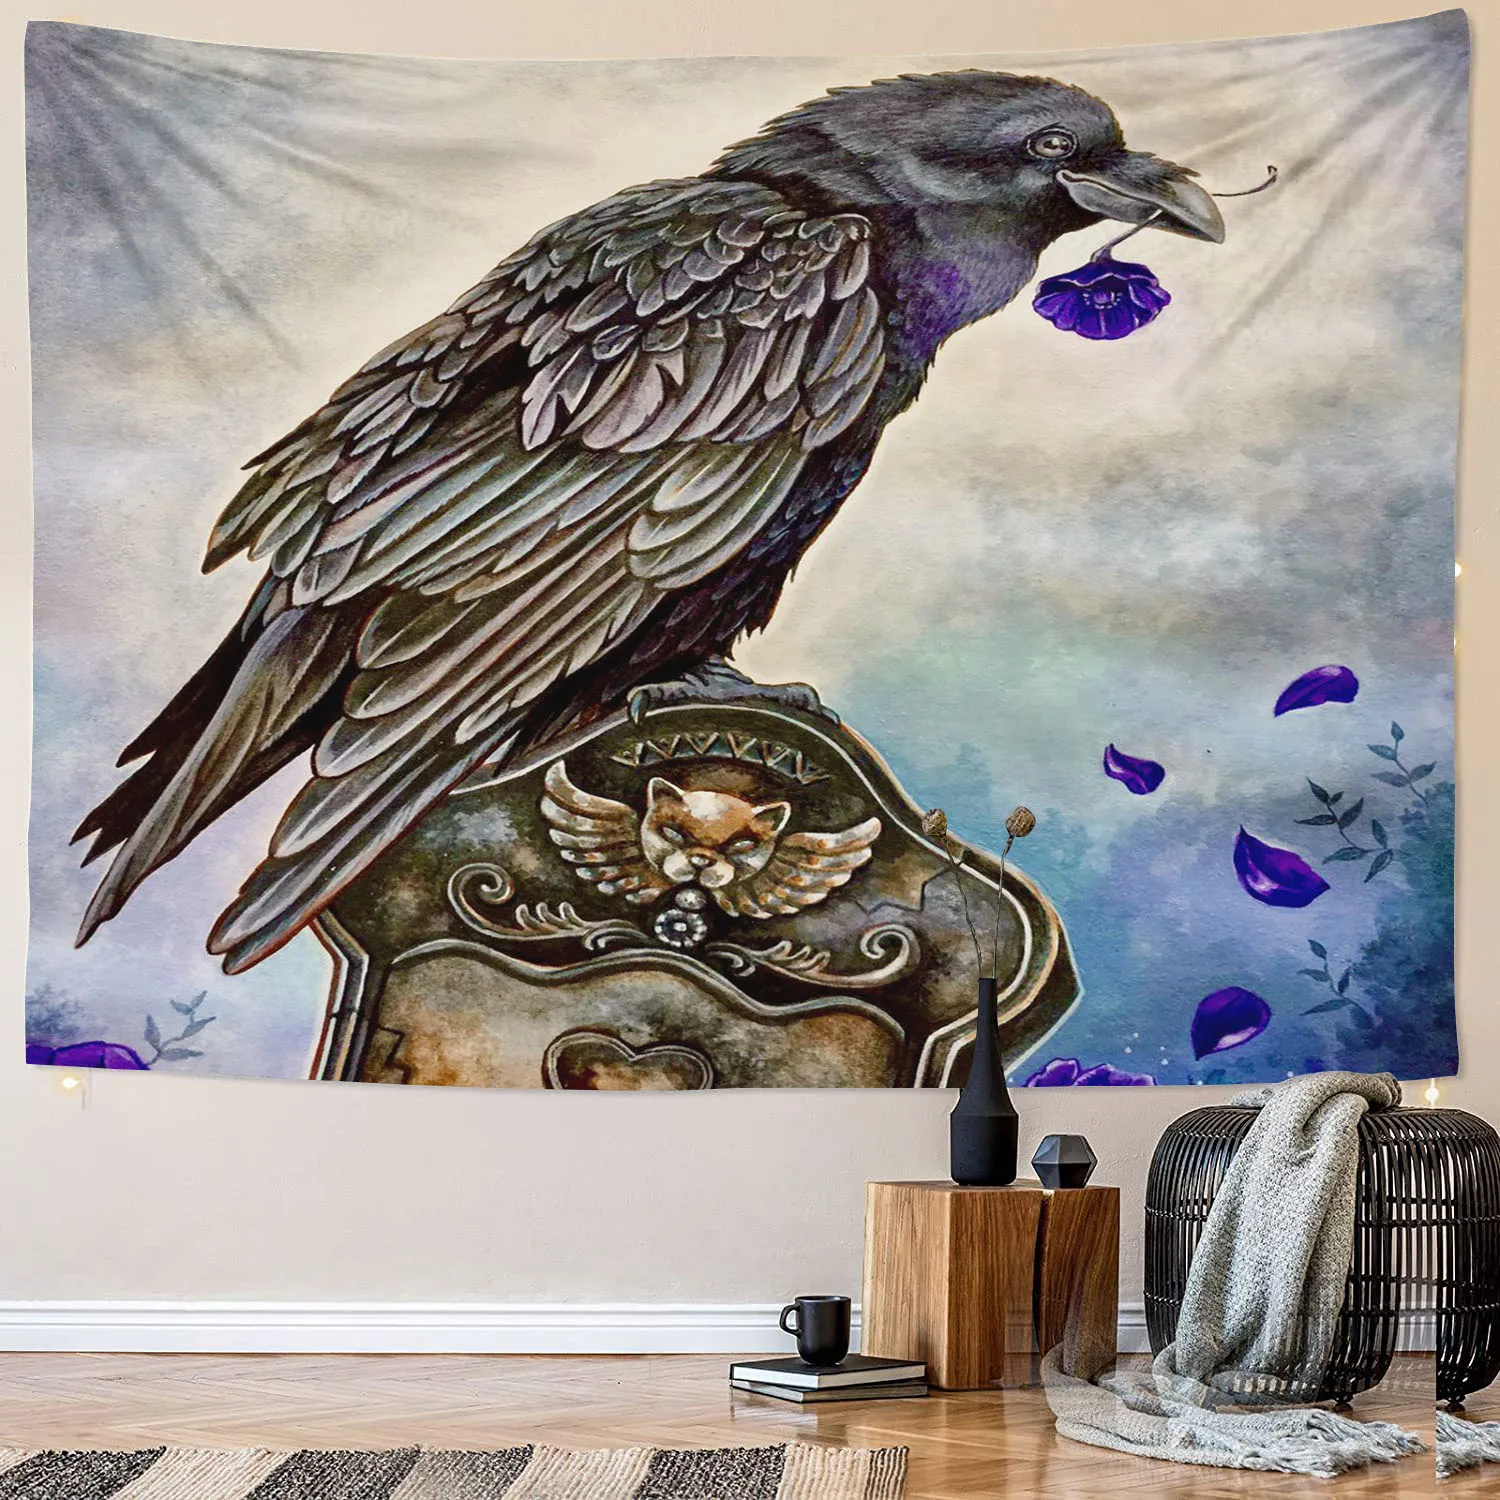 

6 sizes Raven moon tapestry wall hanging deep starry sky psychedelic voodoo tapez hippie mural dorm room home bedroom decor.